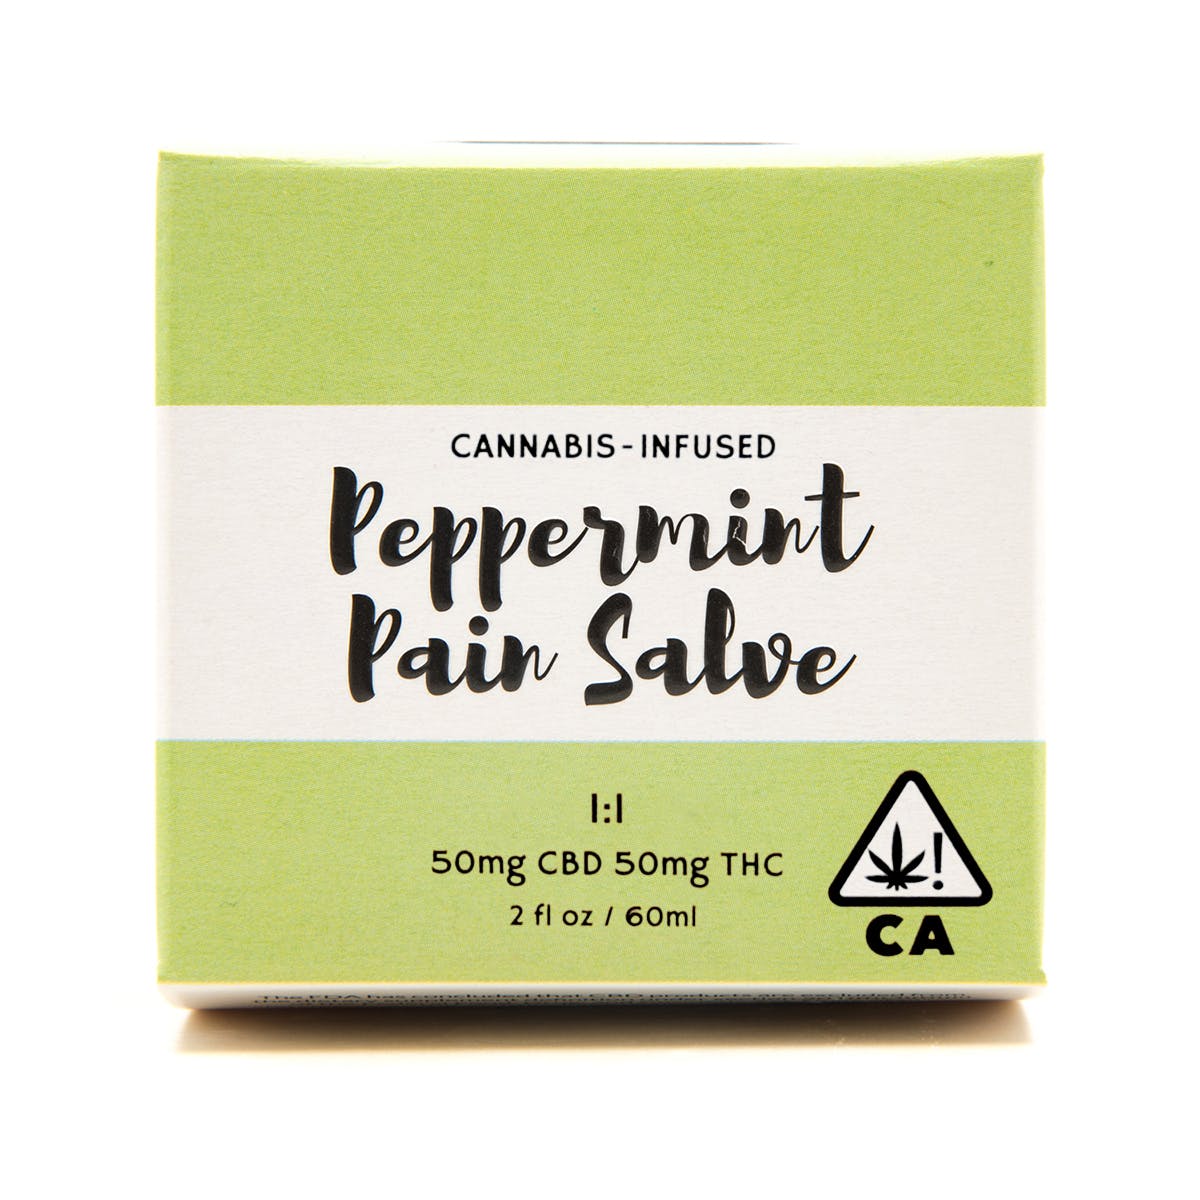 marijuana-dispensaries-mspc-in-mt-shasta-cannabis-infused-peppermint-pain-salve-11